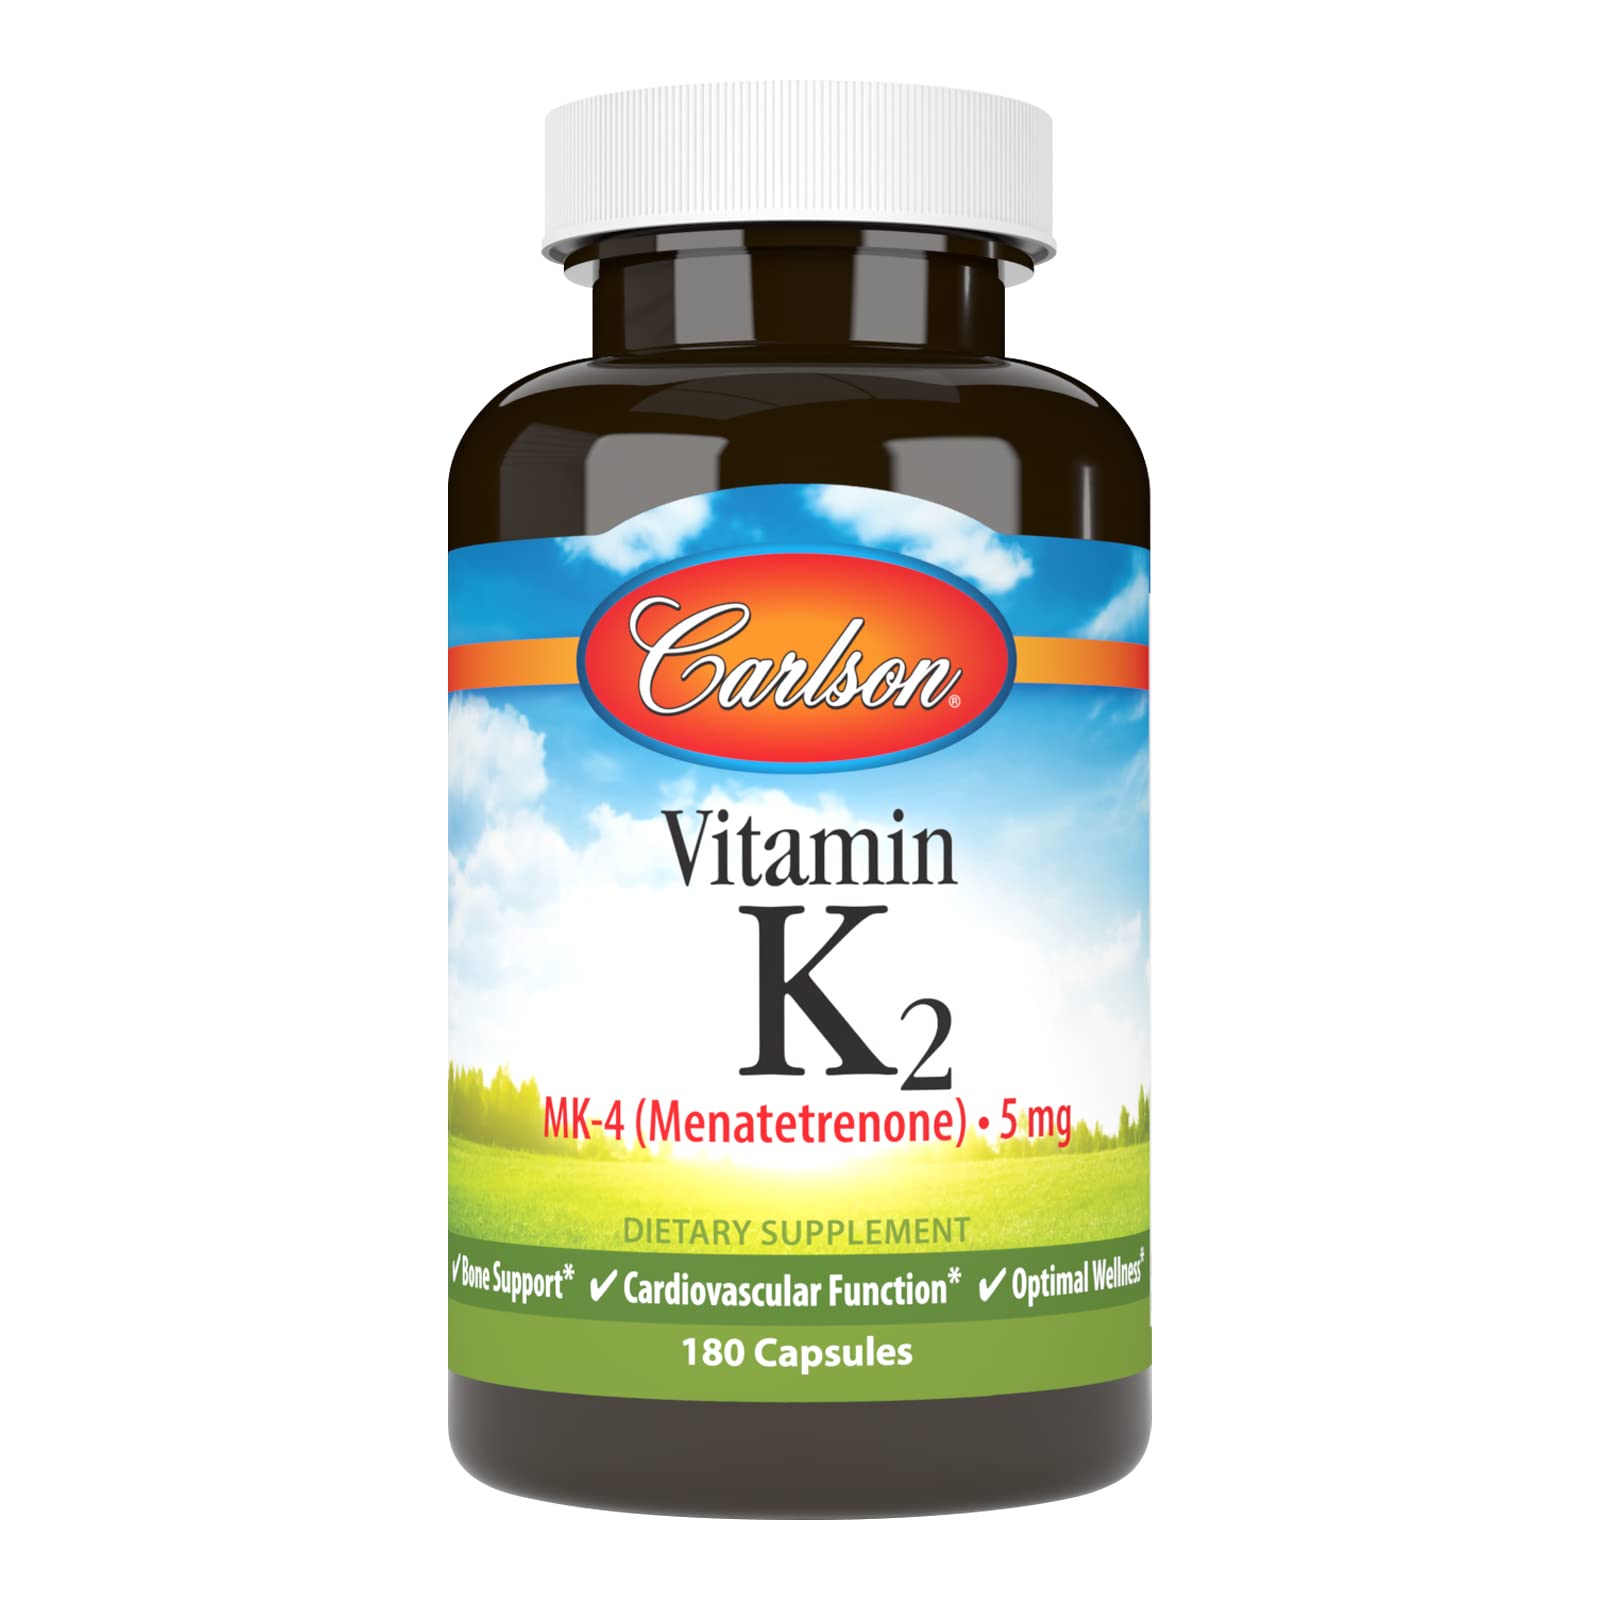 Carlson - Vitamin K2 MK-4 (Menatetrenone), Vitamin K Supplement, Bone Support & Heart Health, K2 Vitamin, Soy-Free, Vitamin K-2, K2 Vitamins, 180 C...